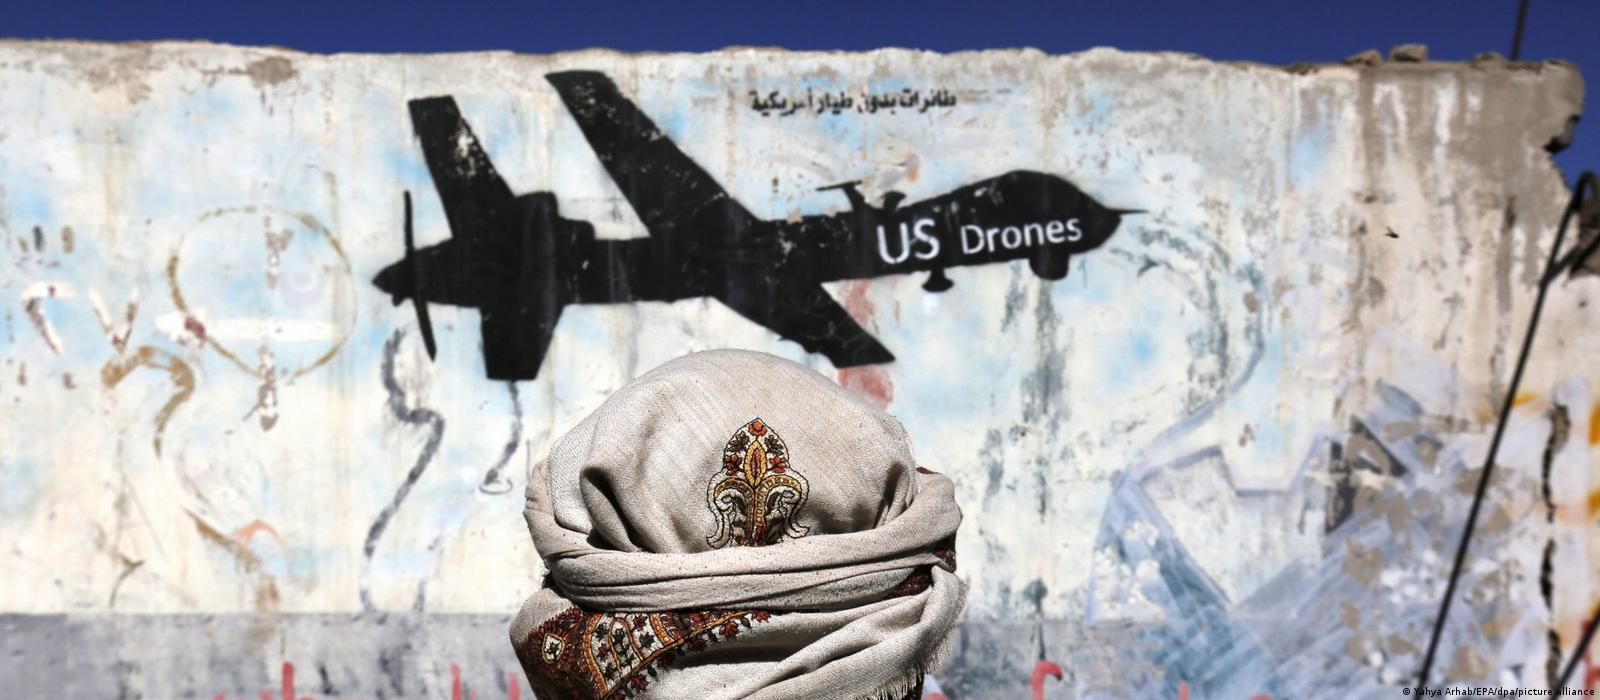 drone strikes killed thousands of civilians: report – DW – 12/19/2021